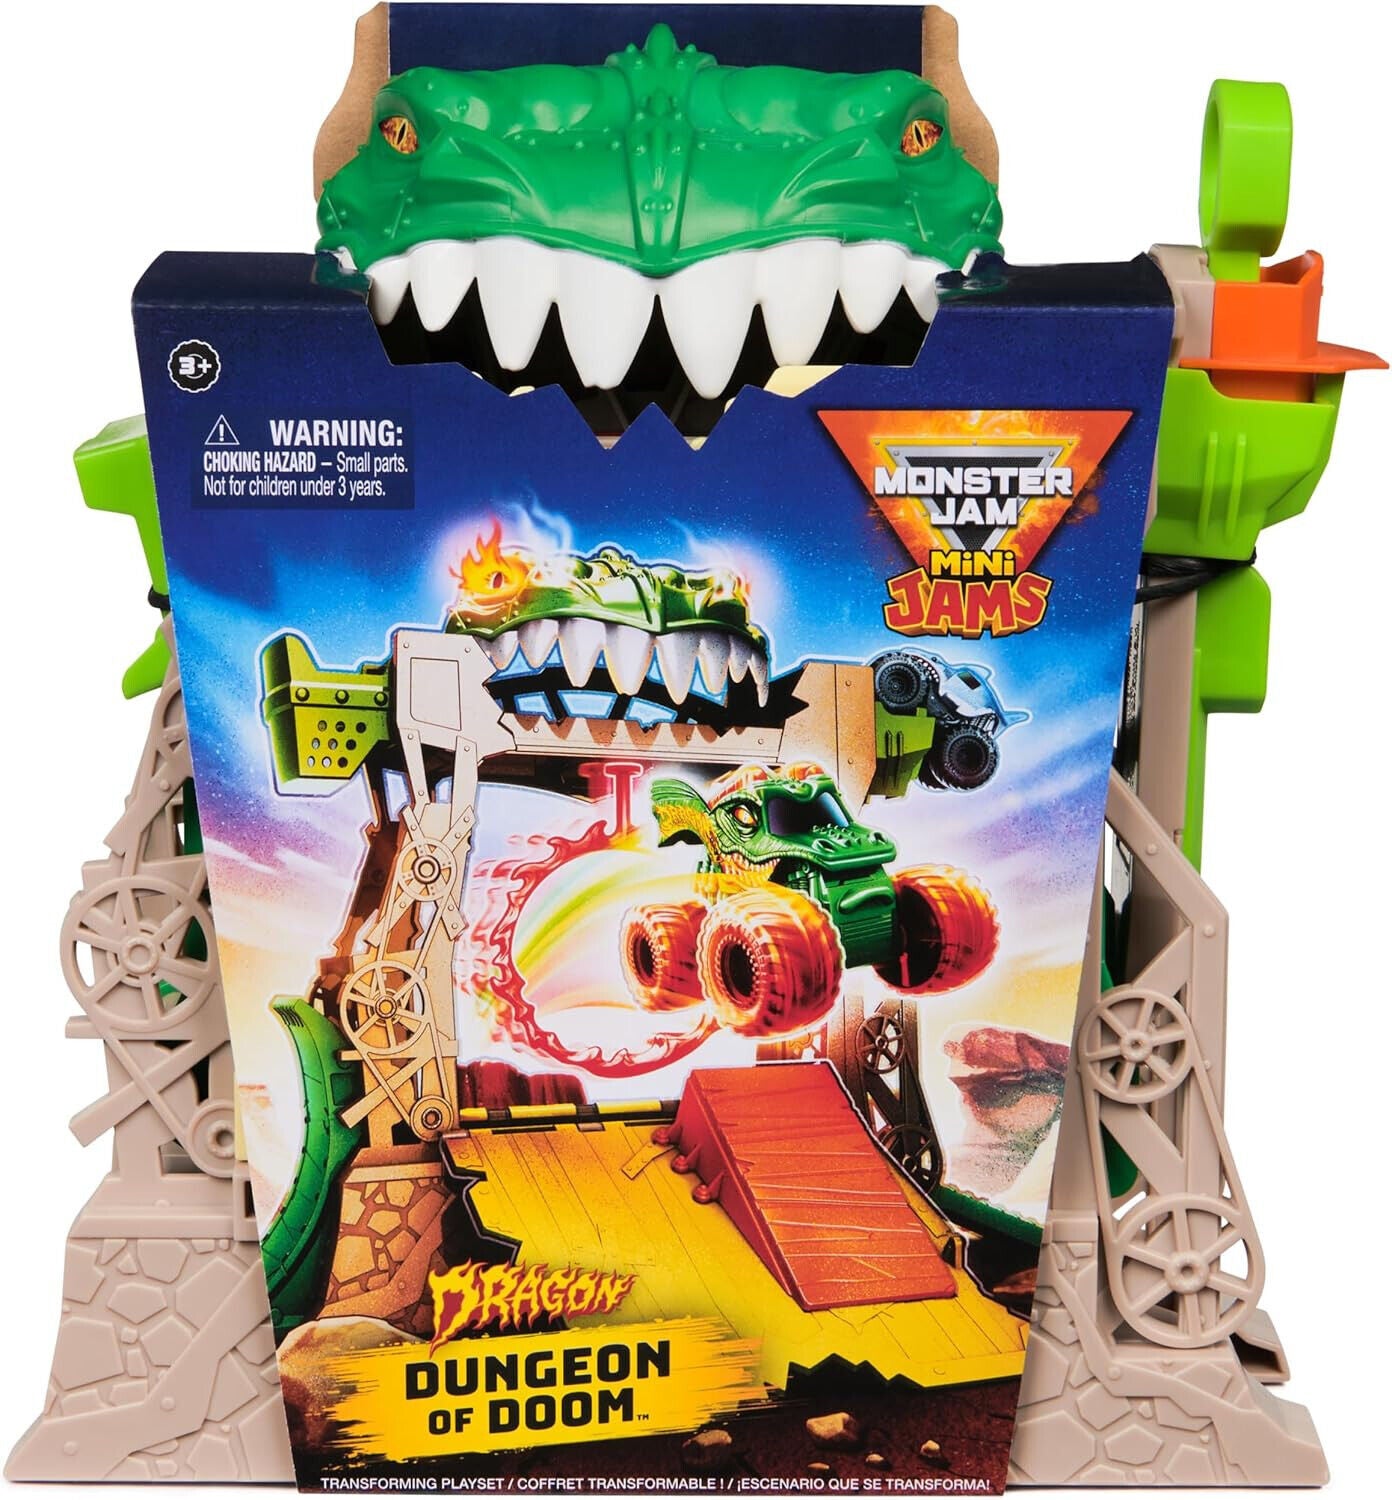 Monster Jam Dragon Dungeon of Doom Mini Jams Playset Brand New